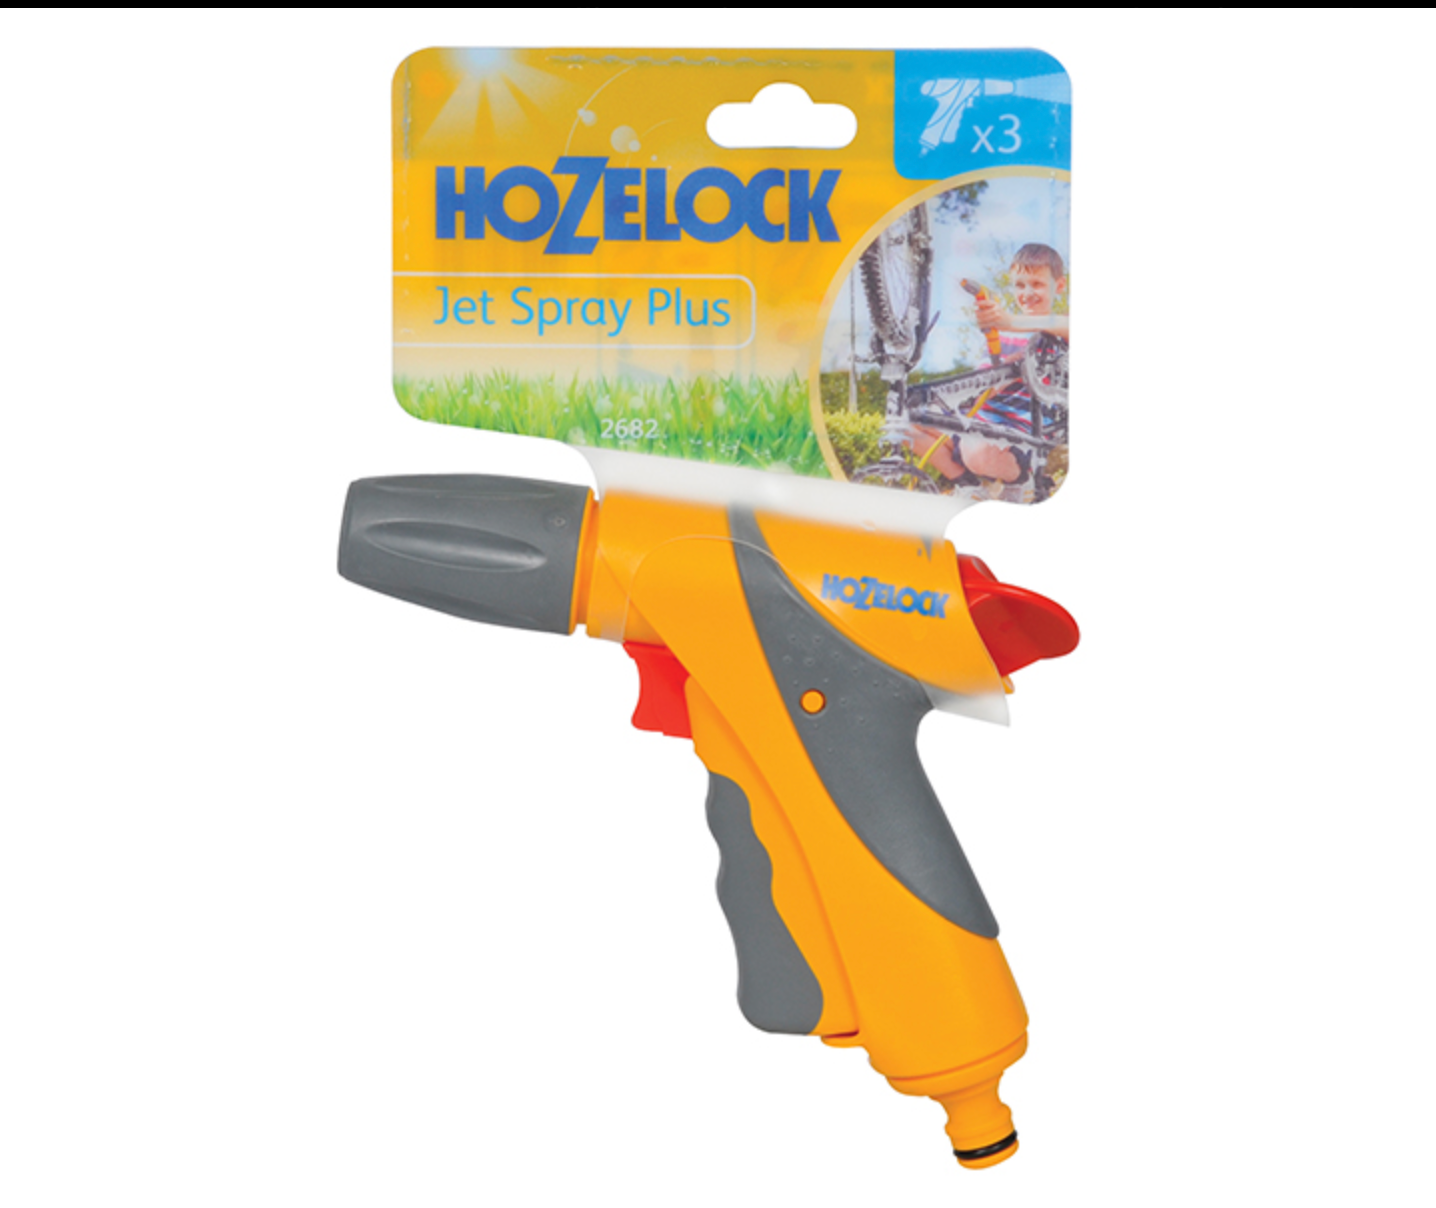 Hozelock 2682 Jet Spray Plus Gun